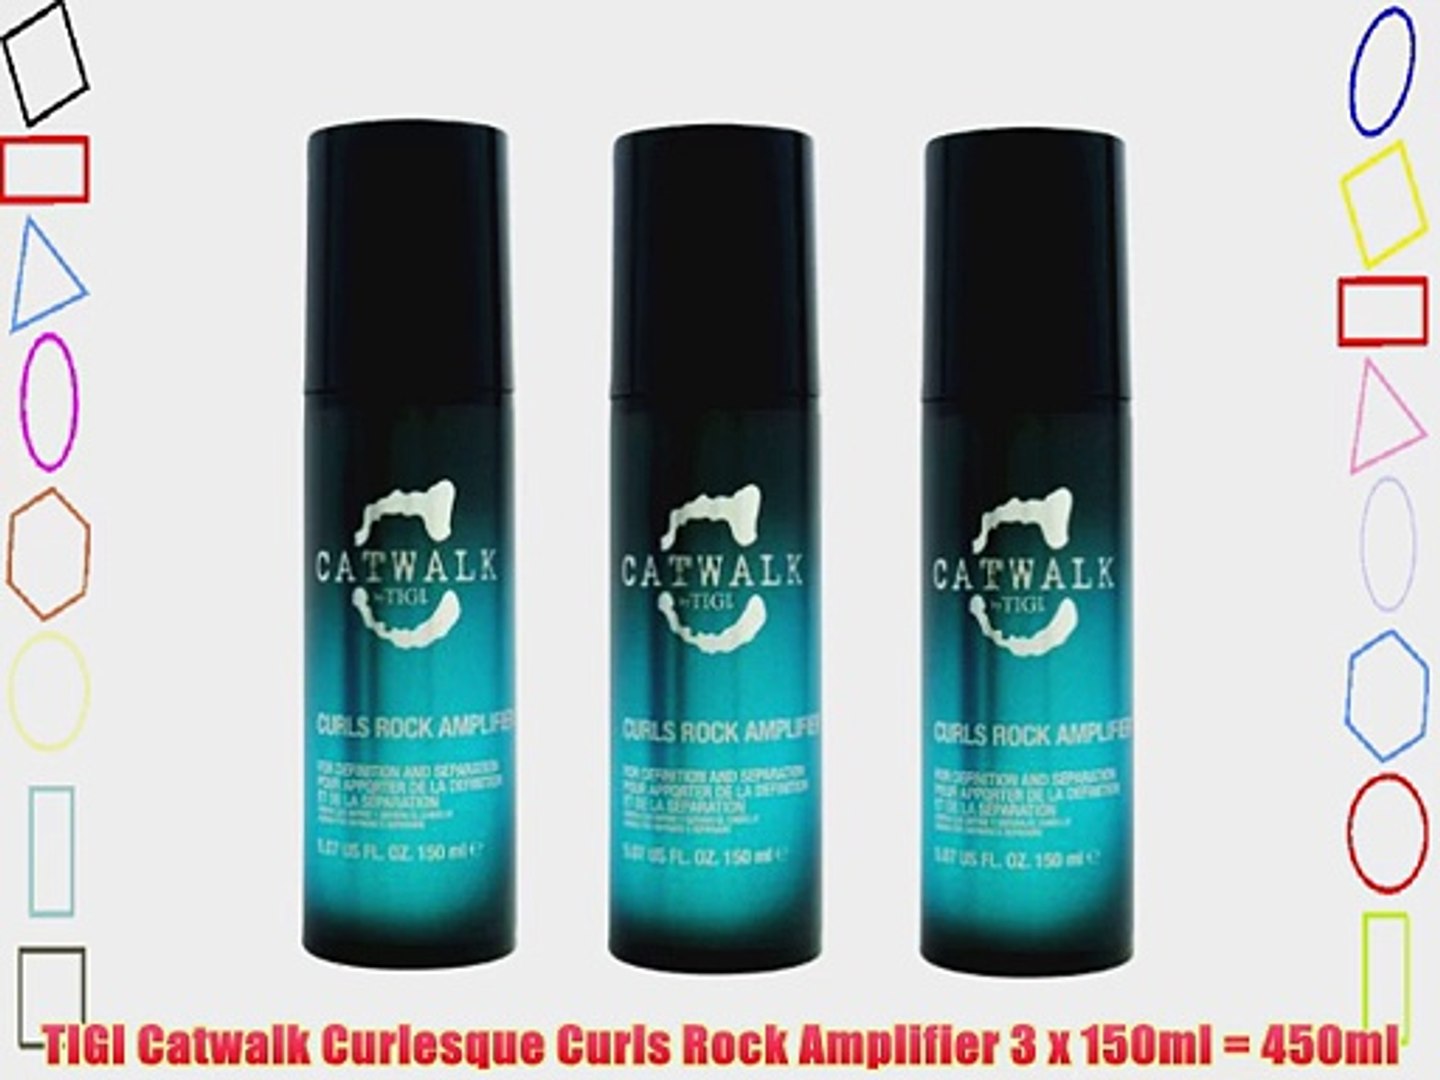 TIGI Catwalk Curlesque Curls Rock Amplifier 3 x 150ml = 450ml ...